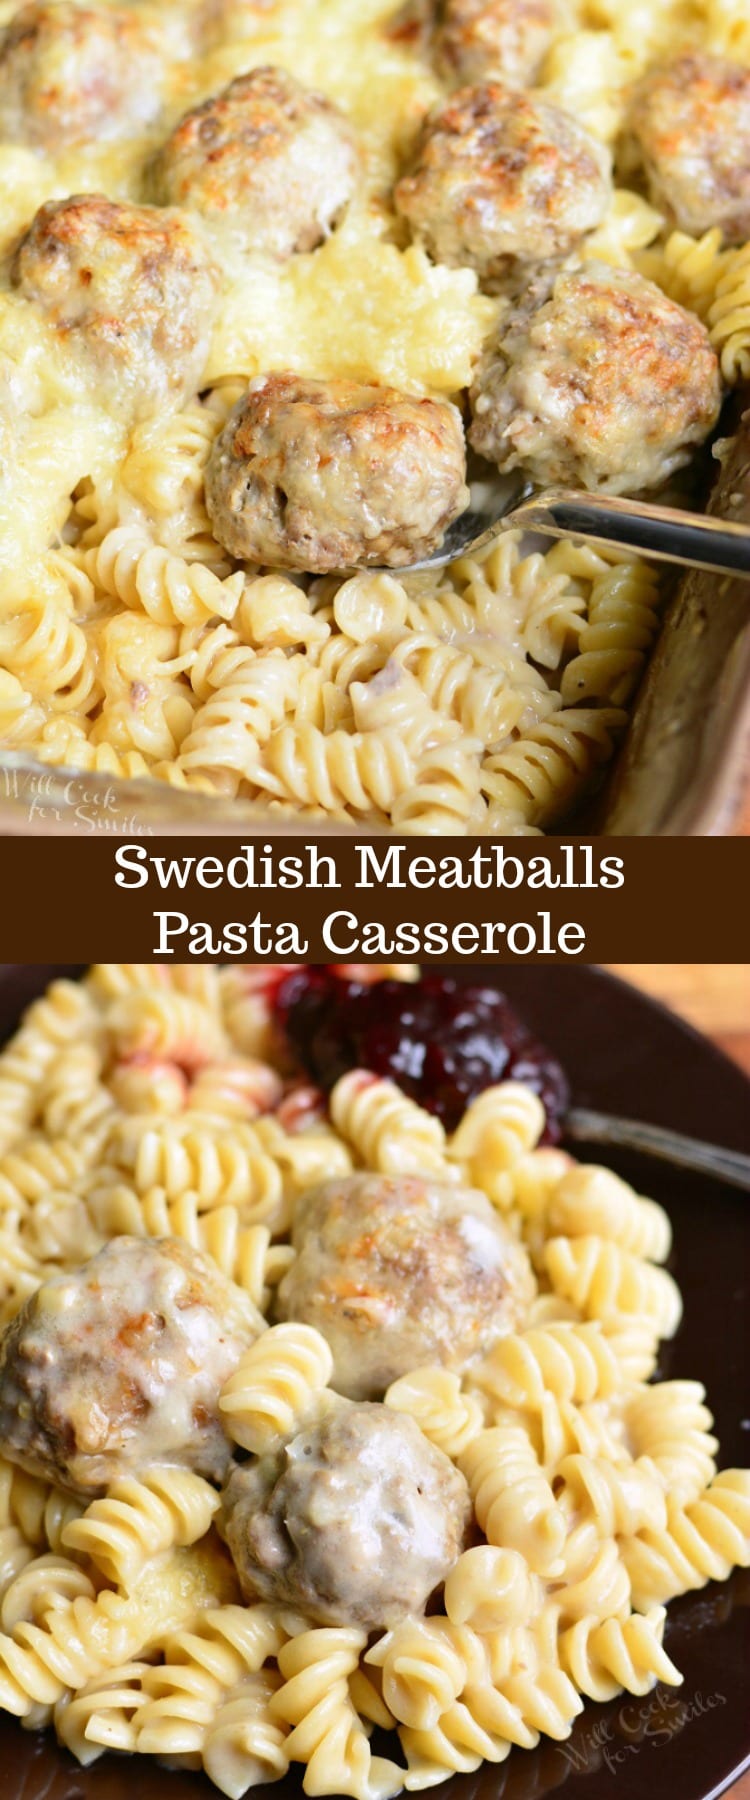 Swedish Meatballs Pasta Casserole collage 